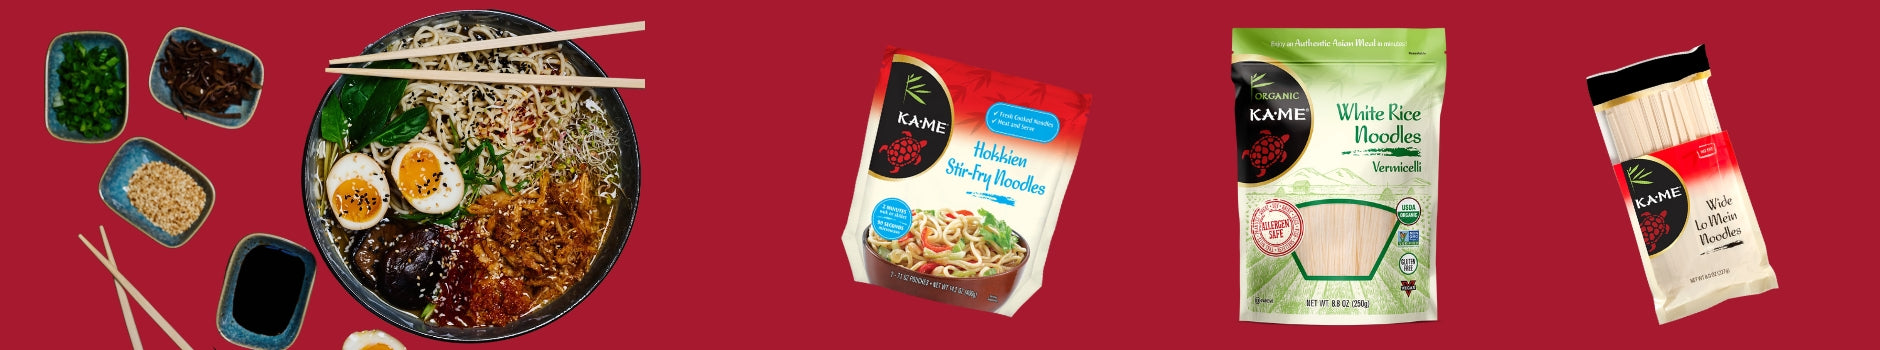 KA-ME Noodles collection